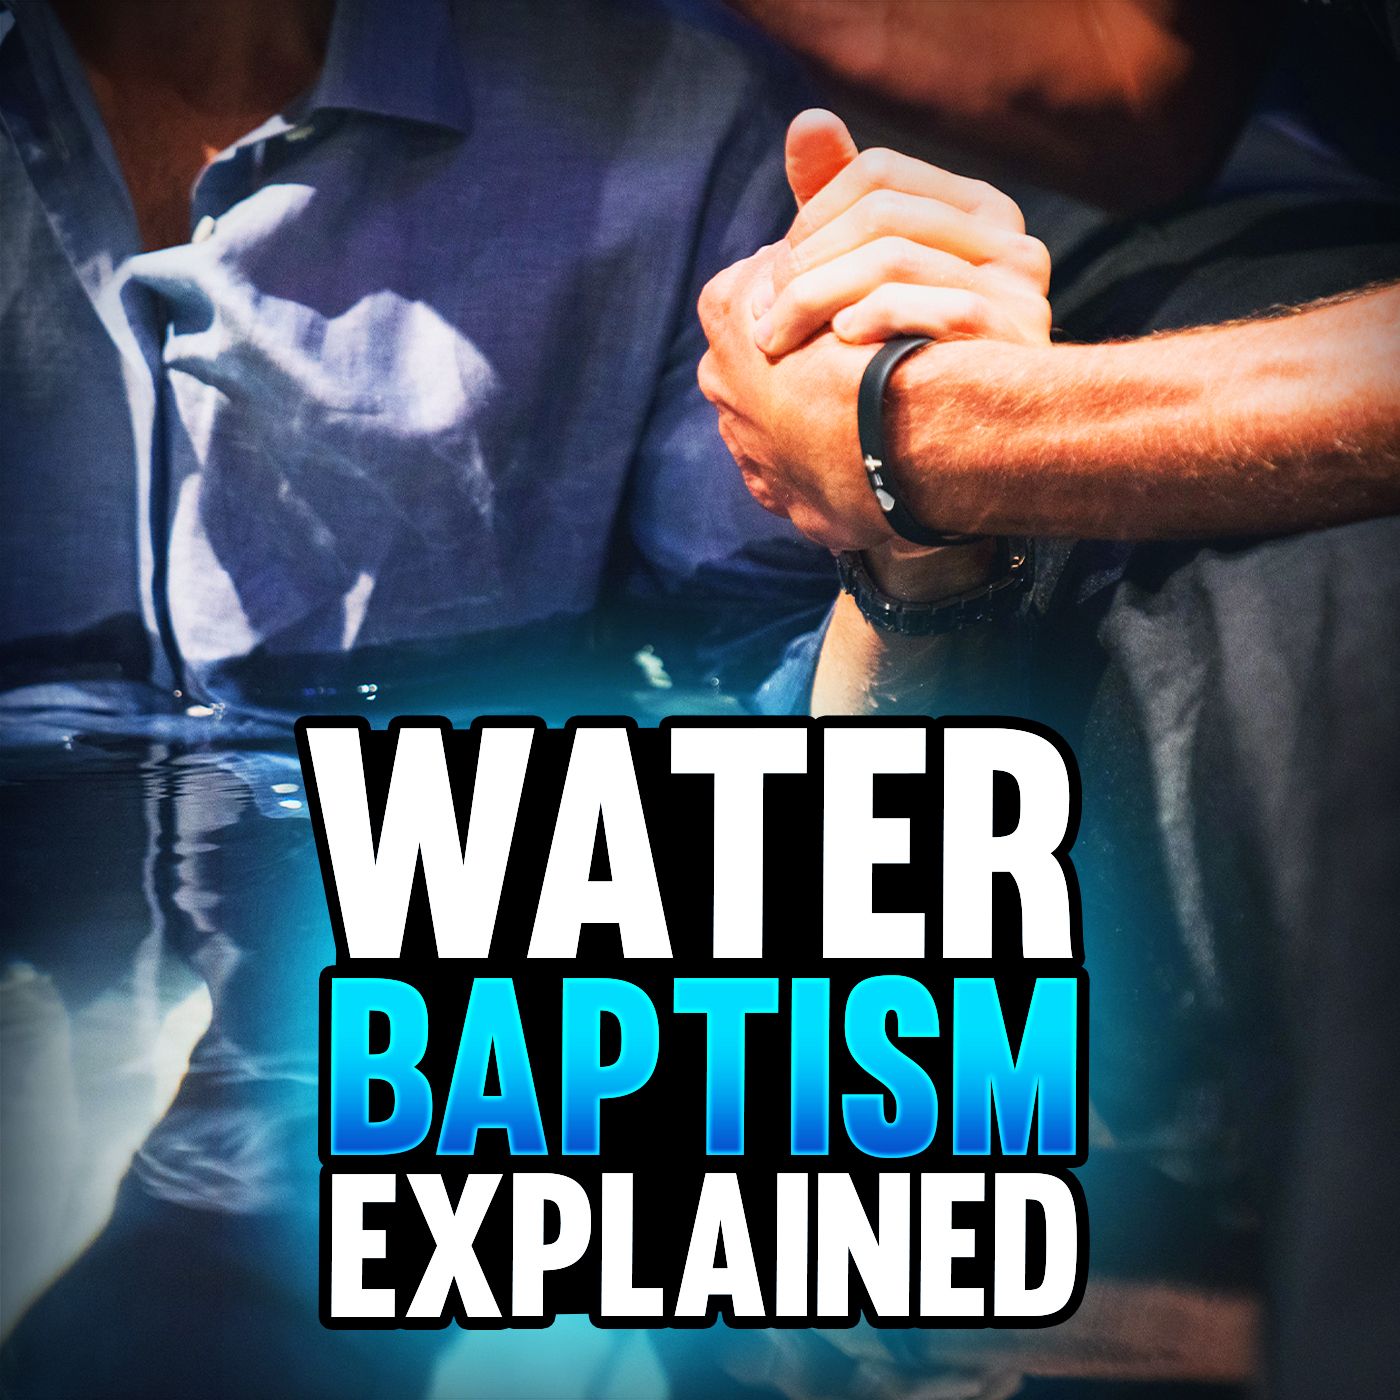 Episode 97 - Water Baptism Explained